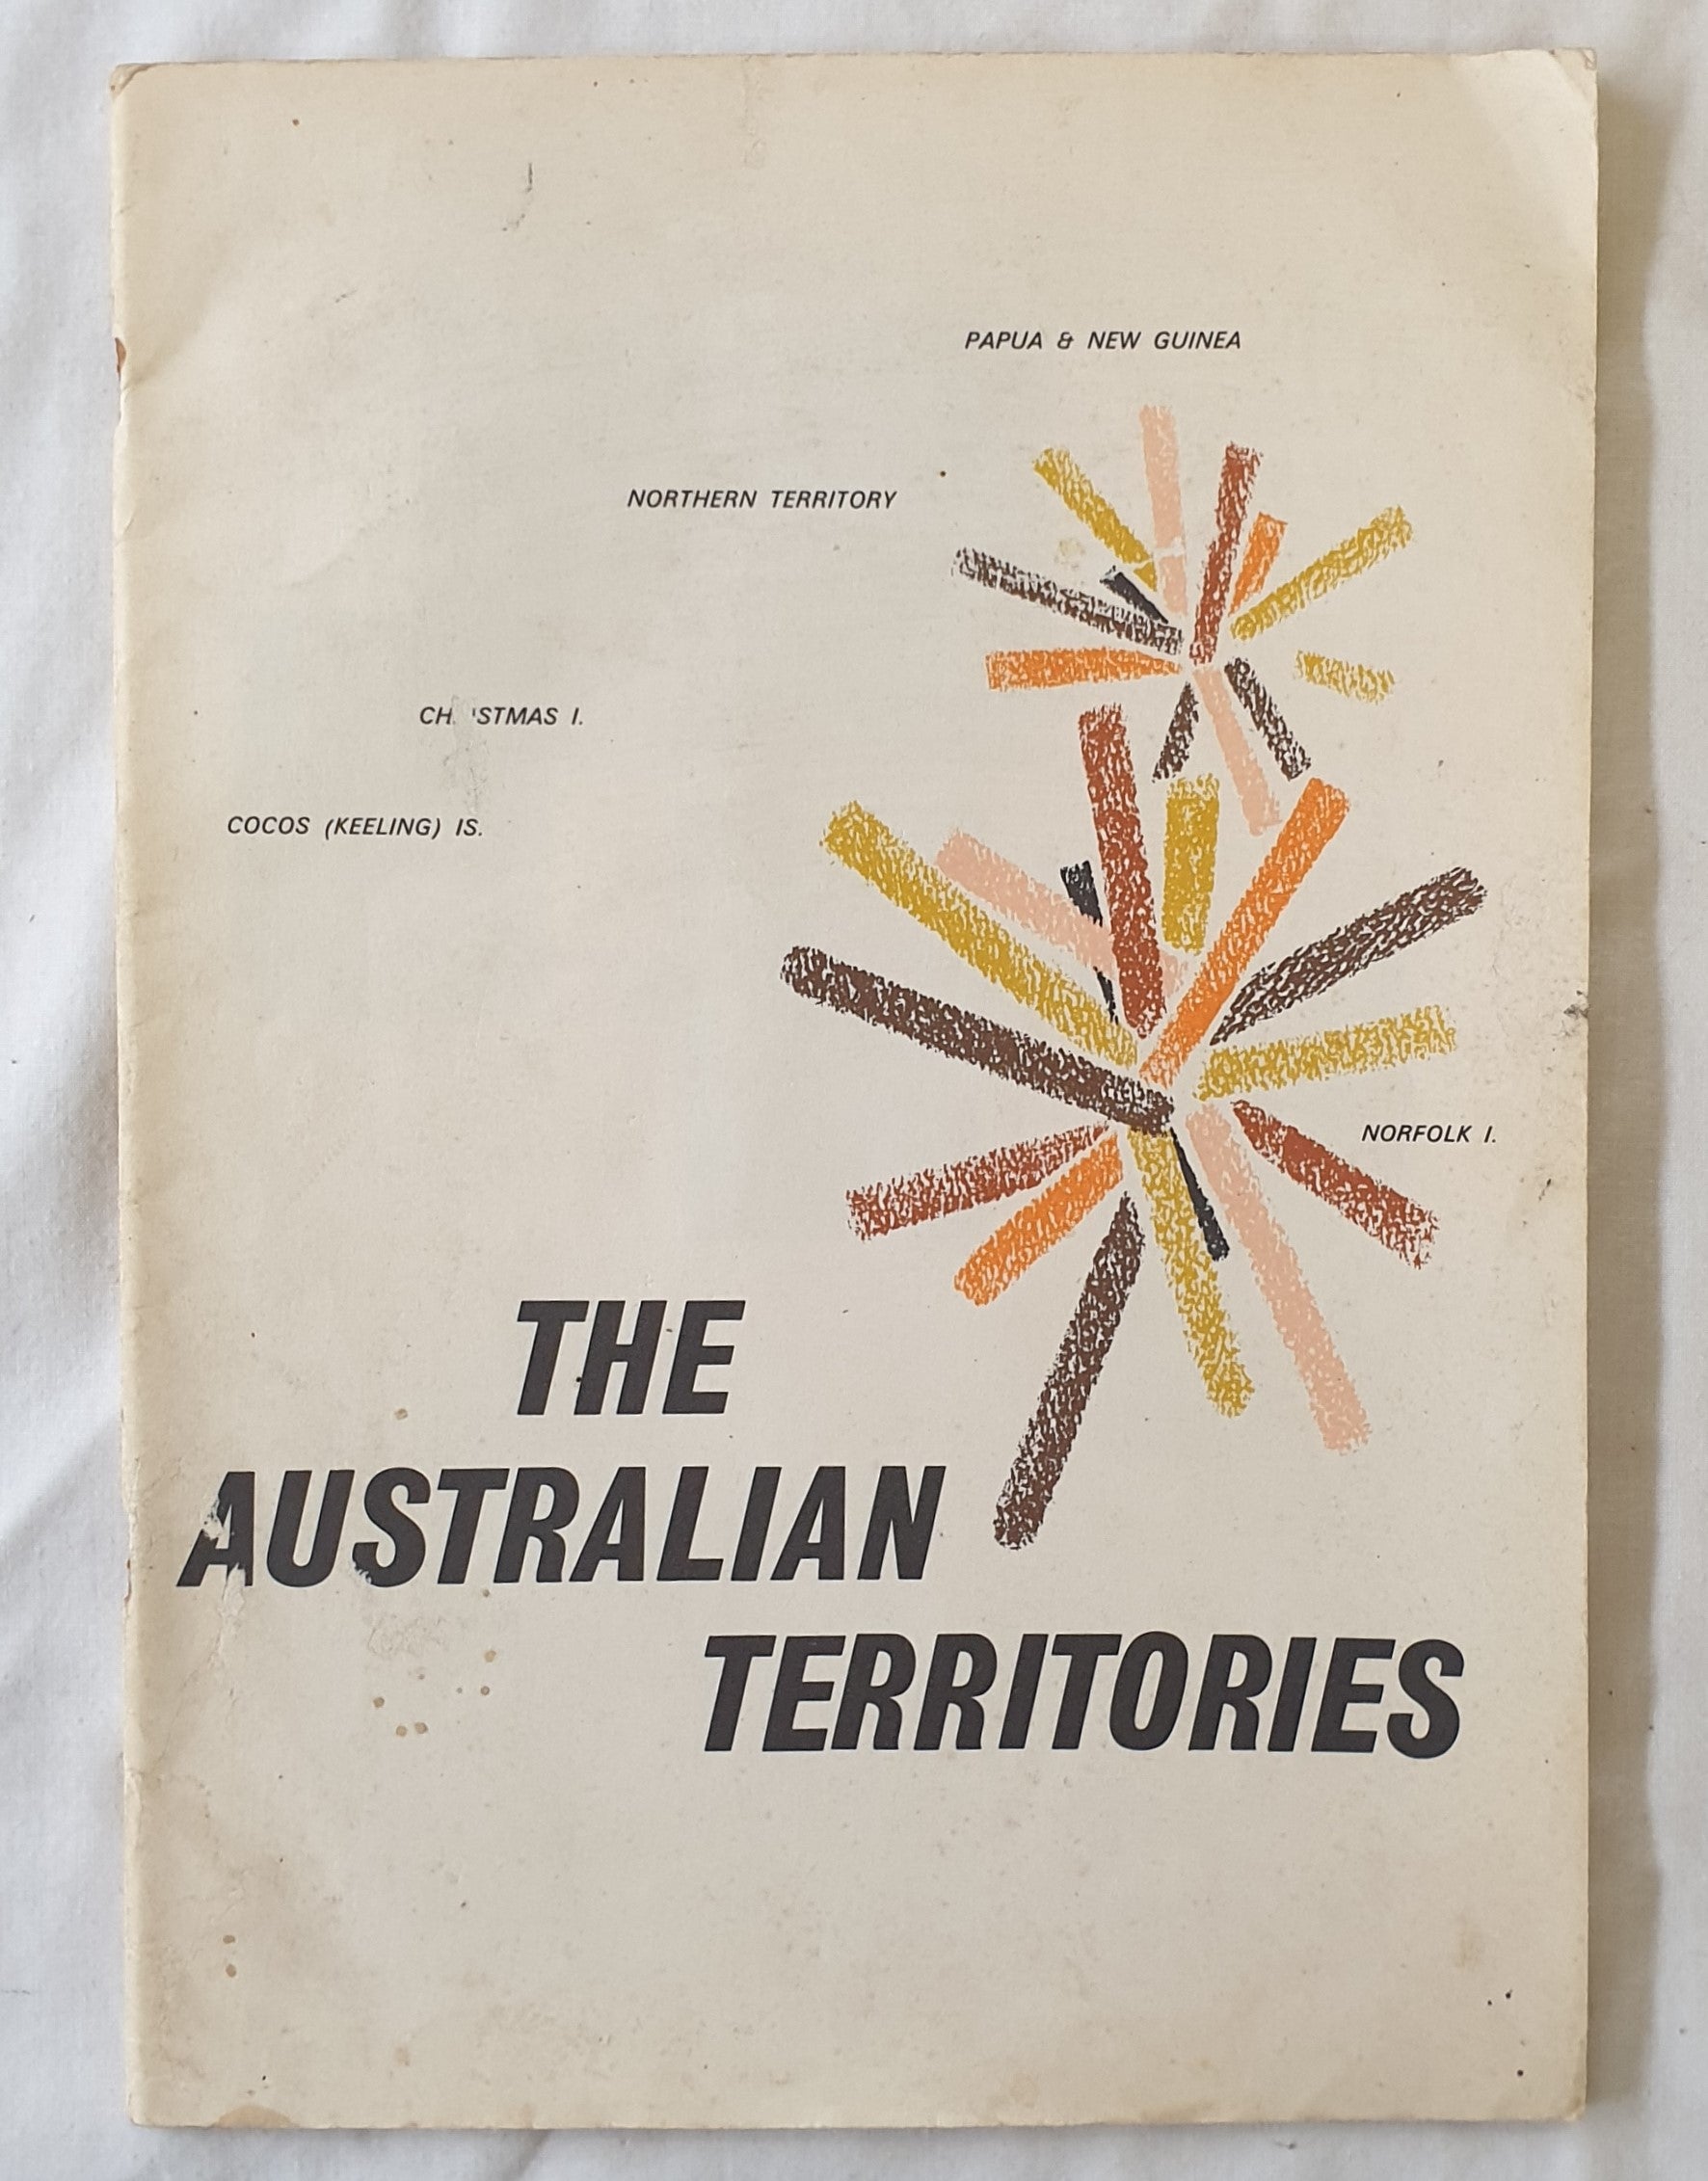 The Australian Territories